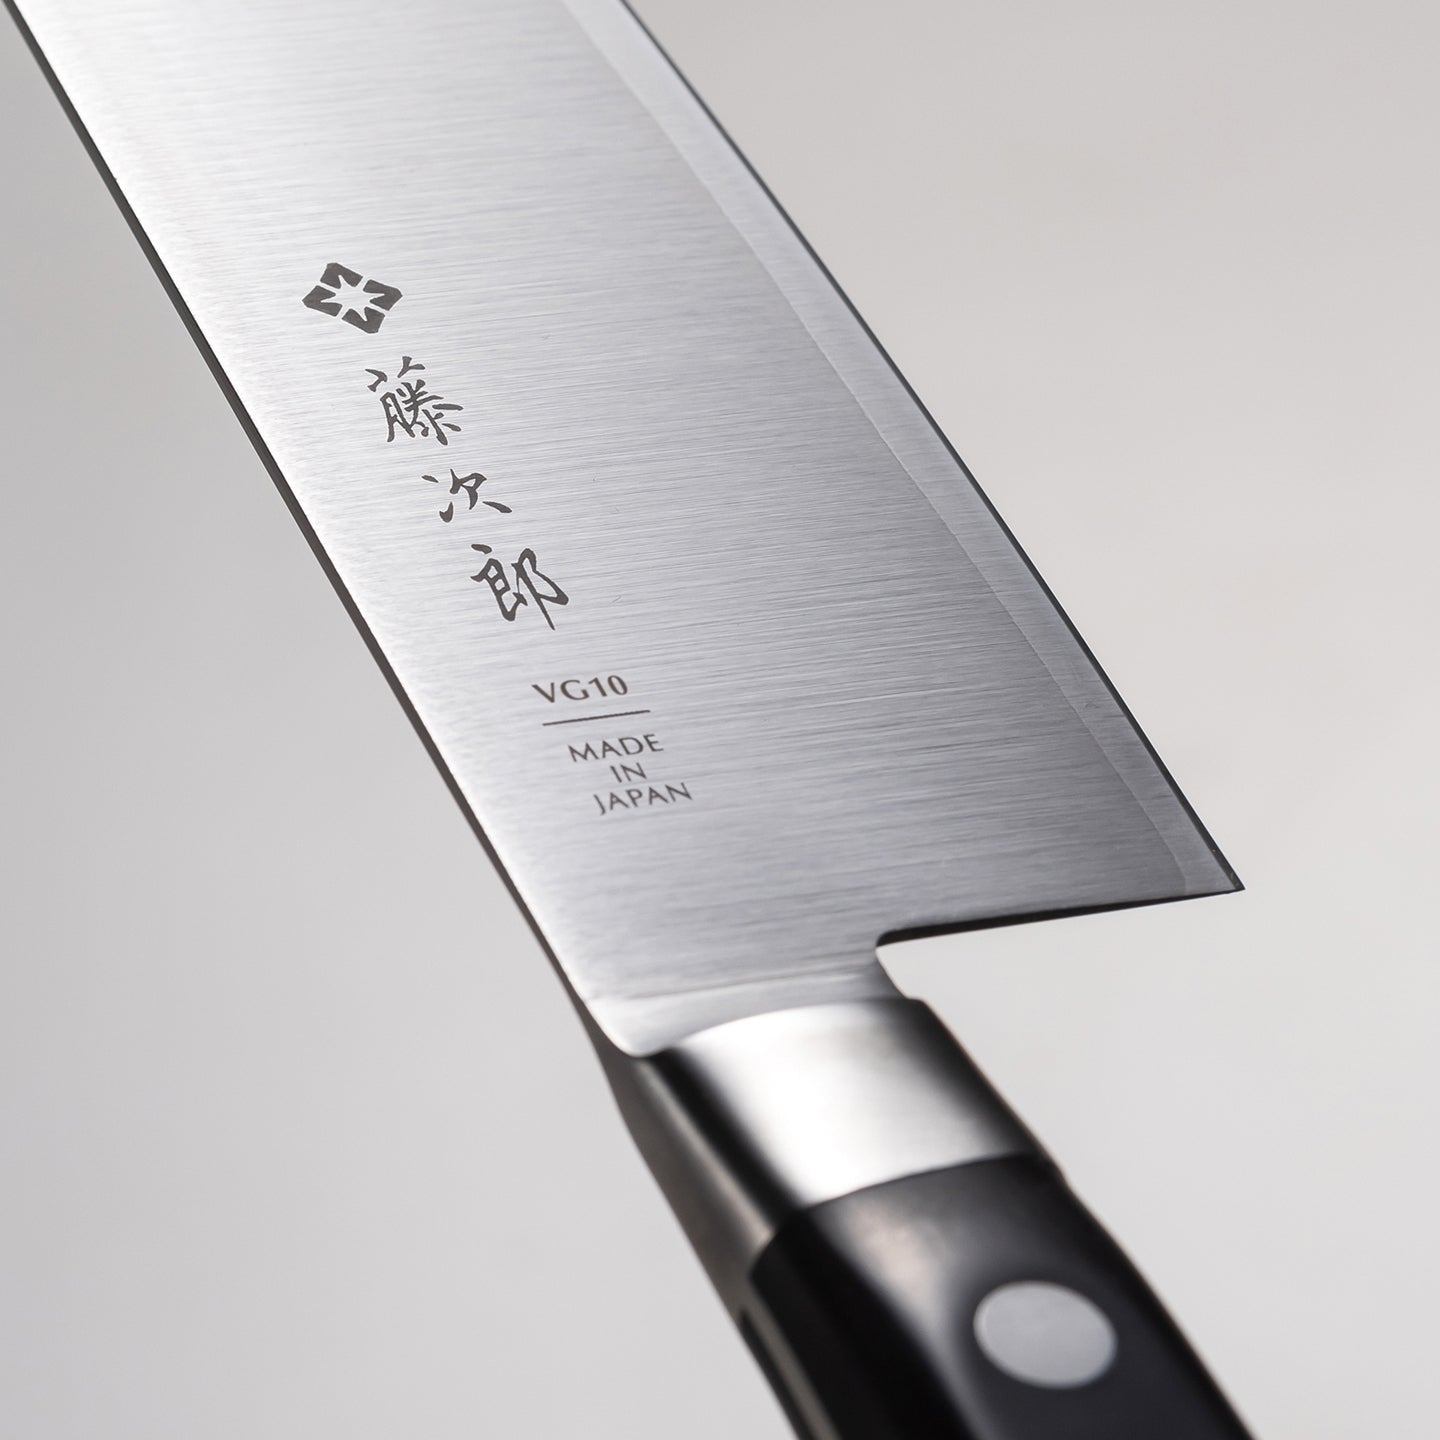 Tojiro Classic 5 Piece Knife Set / Santoku with Magnetic Knife Block / Oak